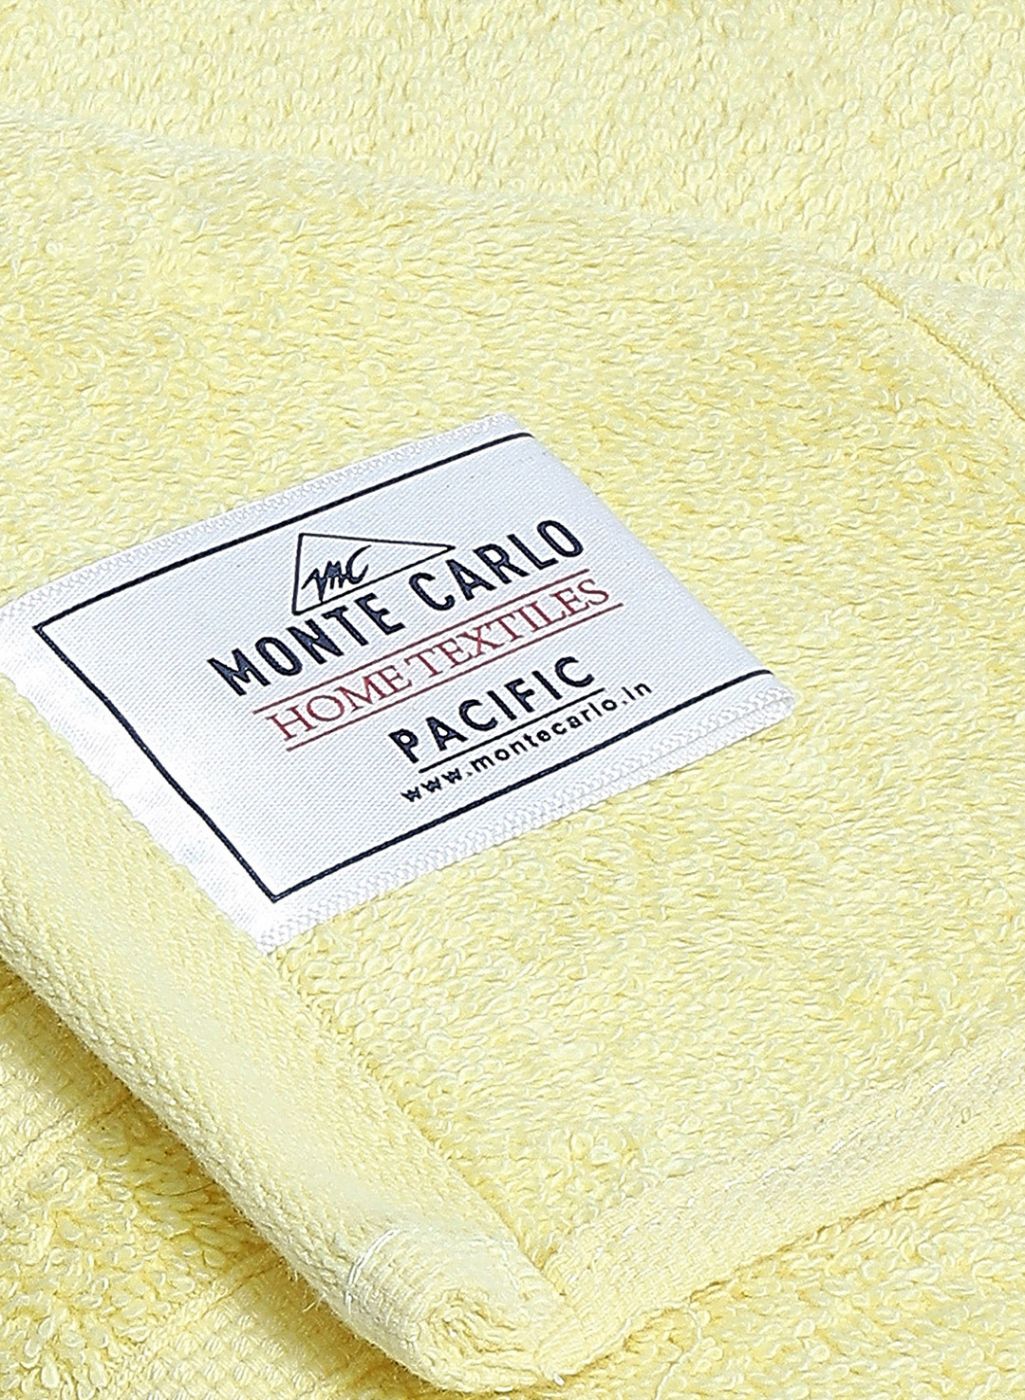 Yellow Cotton 525 GSM Bath Towel